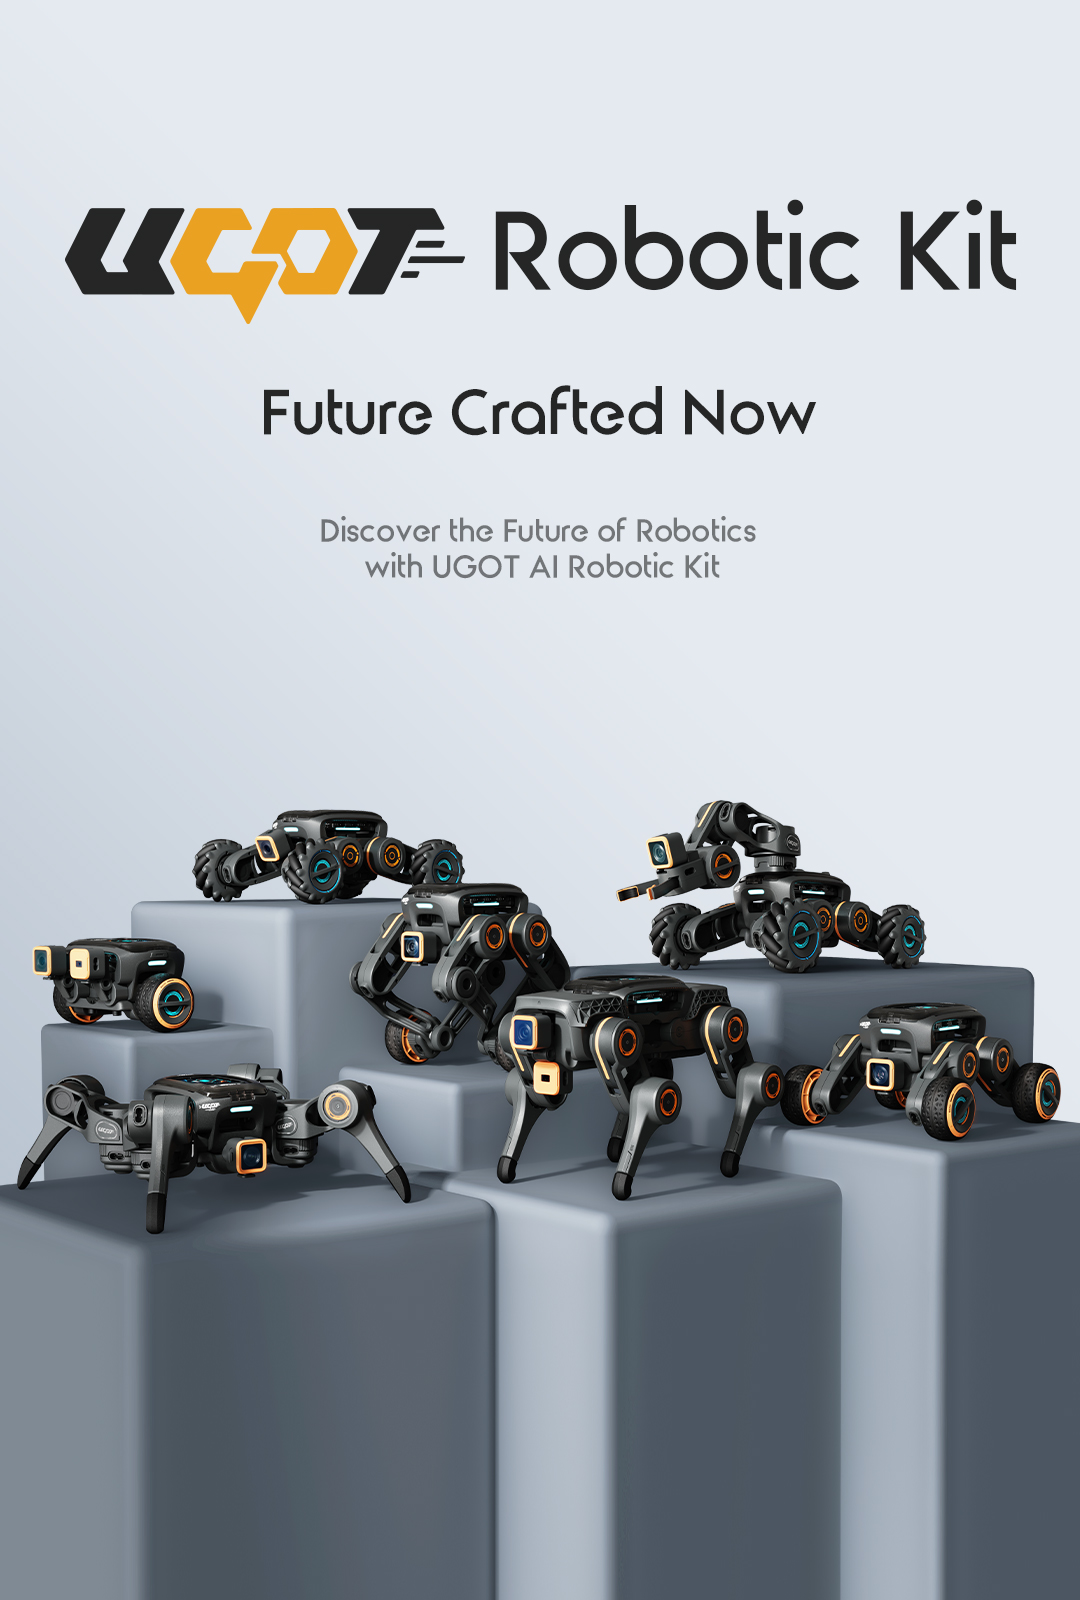 Hubert the Humanoid: Your Advanced Robotics Study Buddy by ArcBotics —  Kickstarter